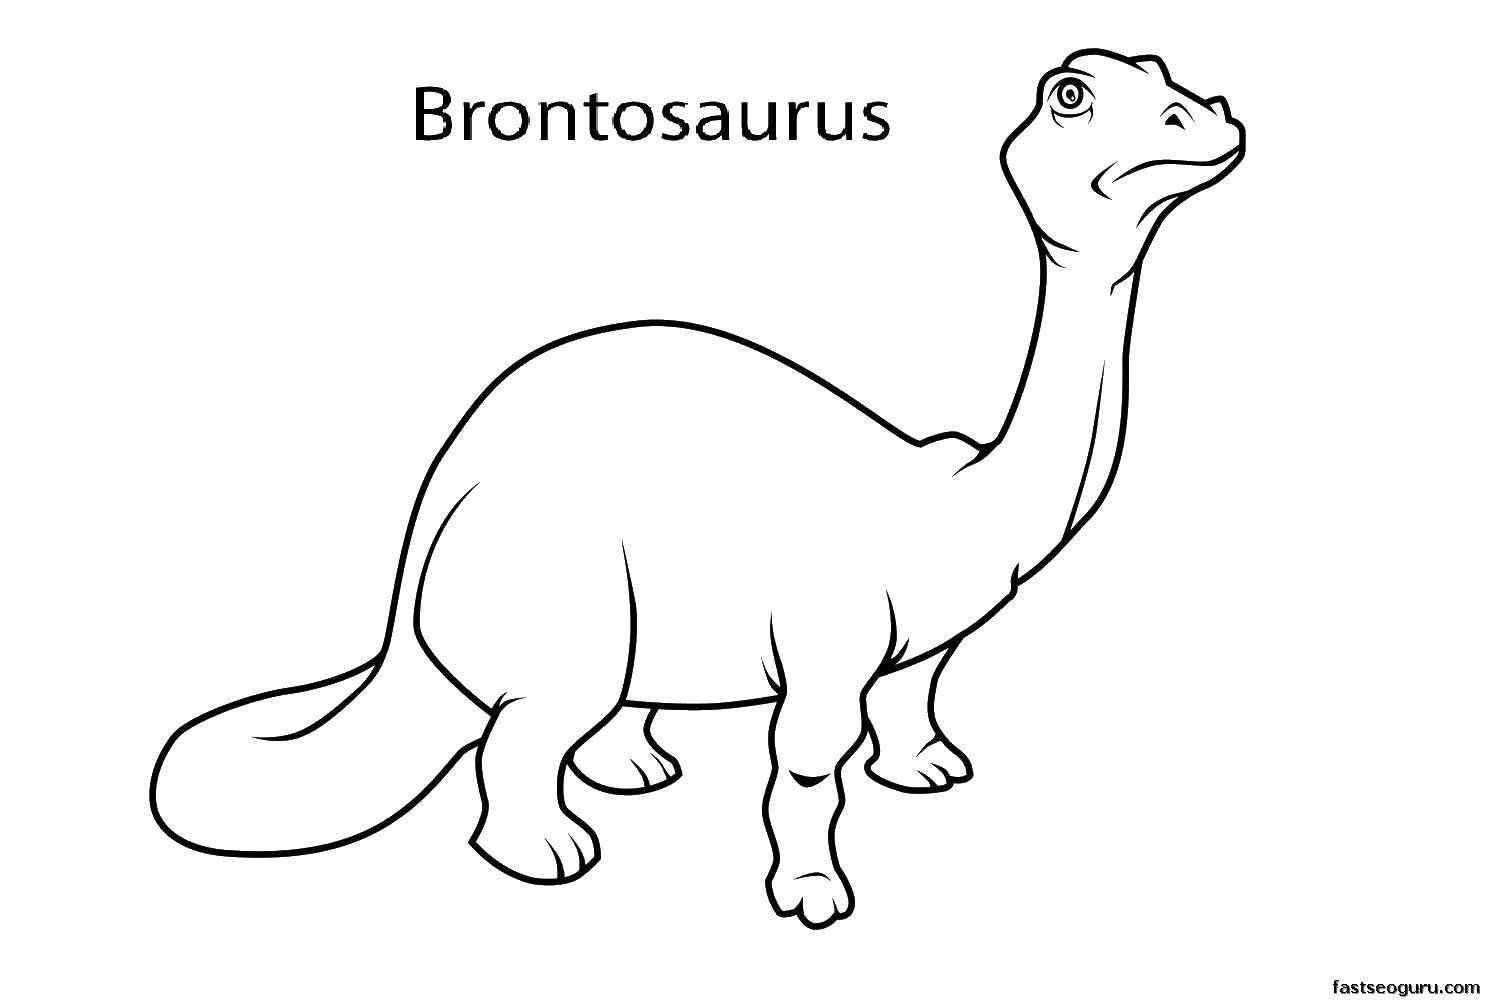 Coloring Little Brontosaurus. Category dinosaur. Tags:  Brontosaurus, dinosaur, tail.